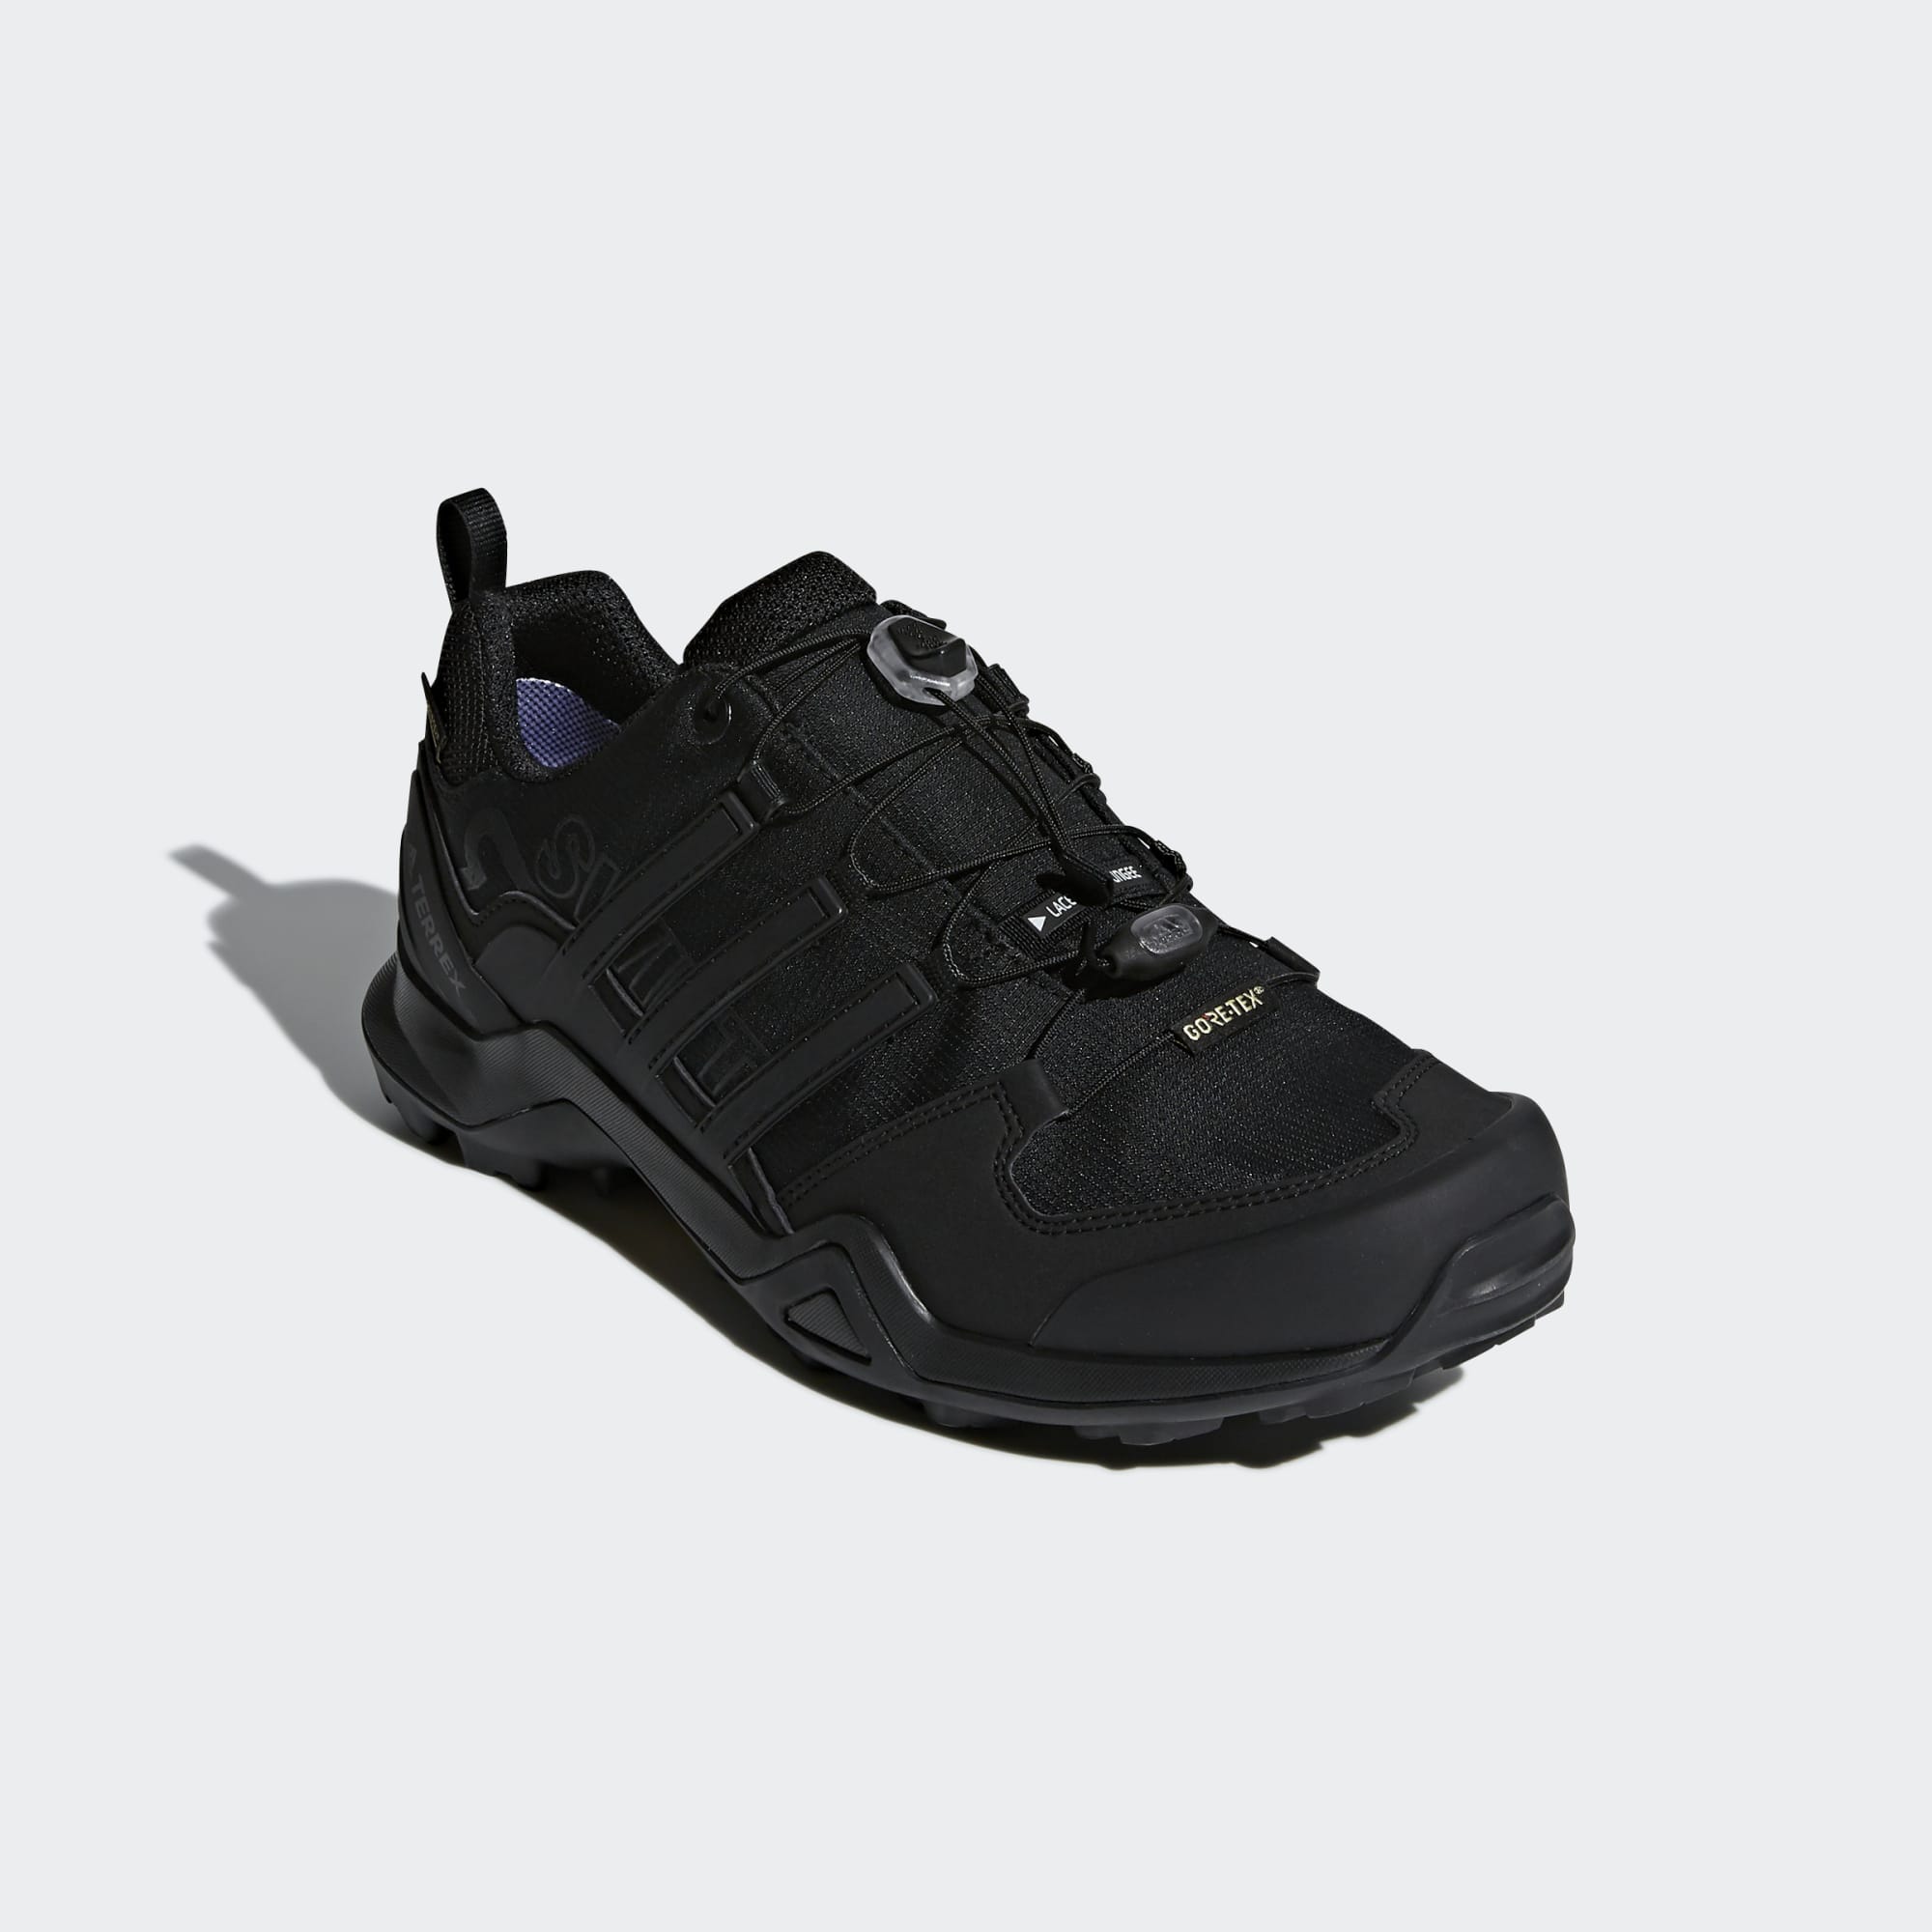 Men's adidas Terrex Swift R2 Gore-Tex Hiking Shoe in Core Black / Core Black / Core Black from the side view